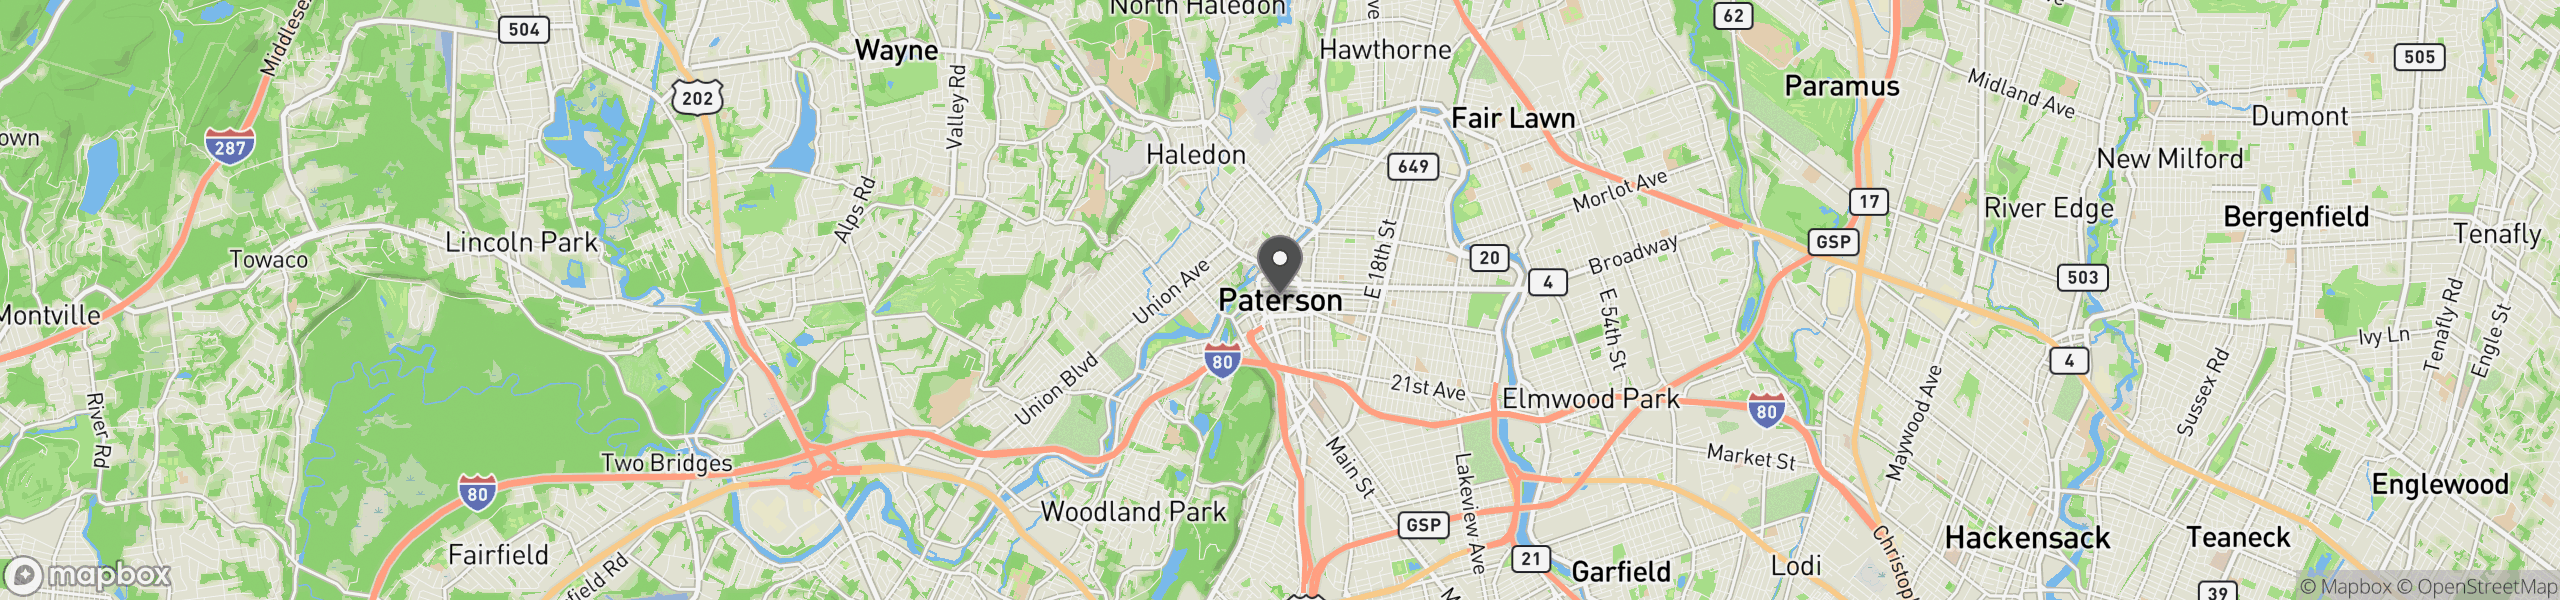 Paterson, NJ 07510